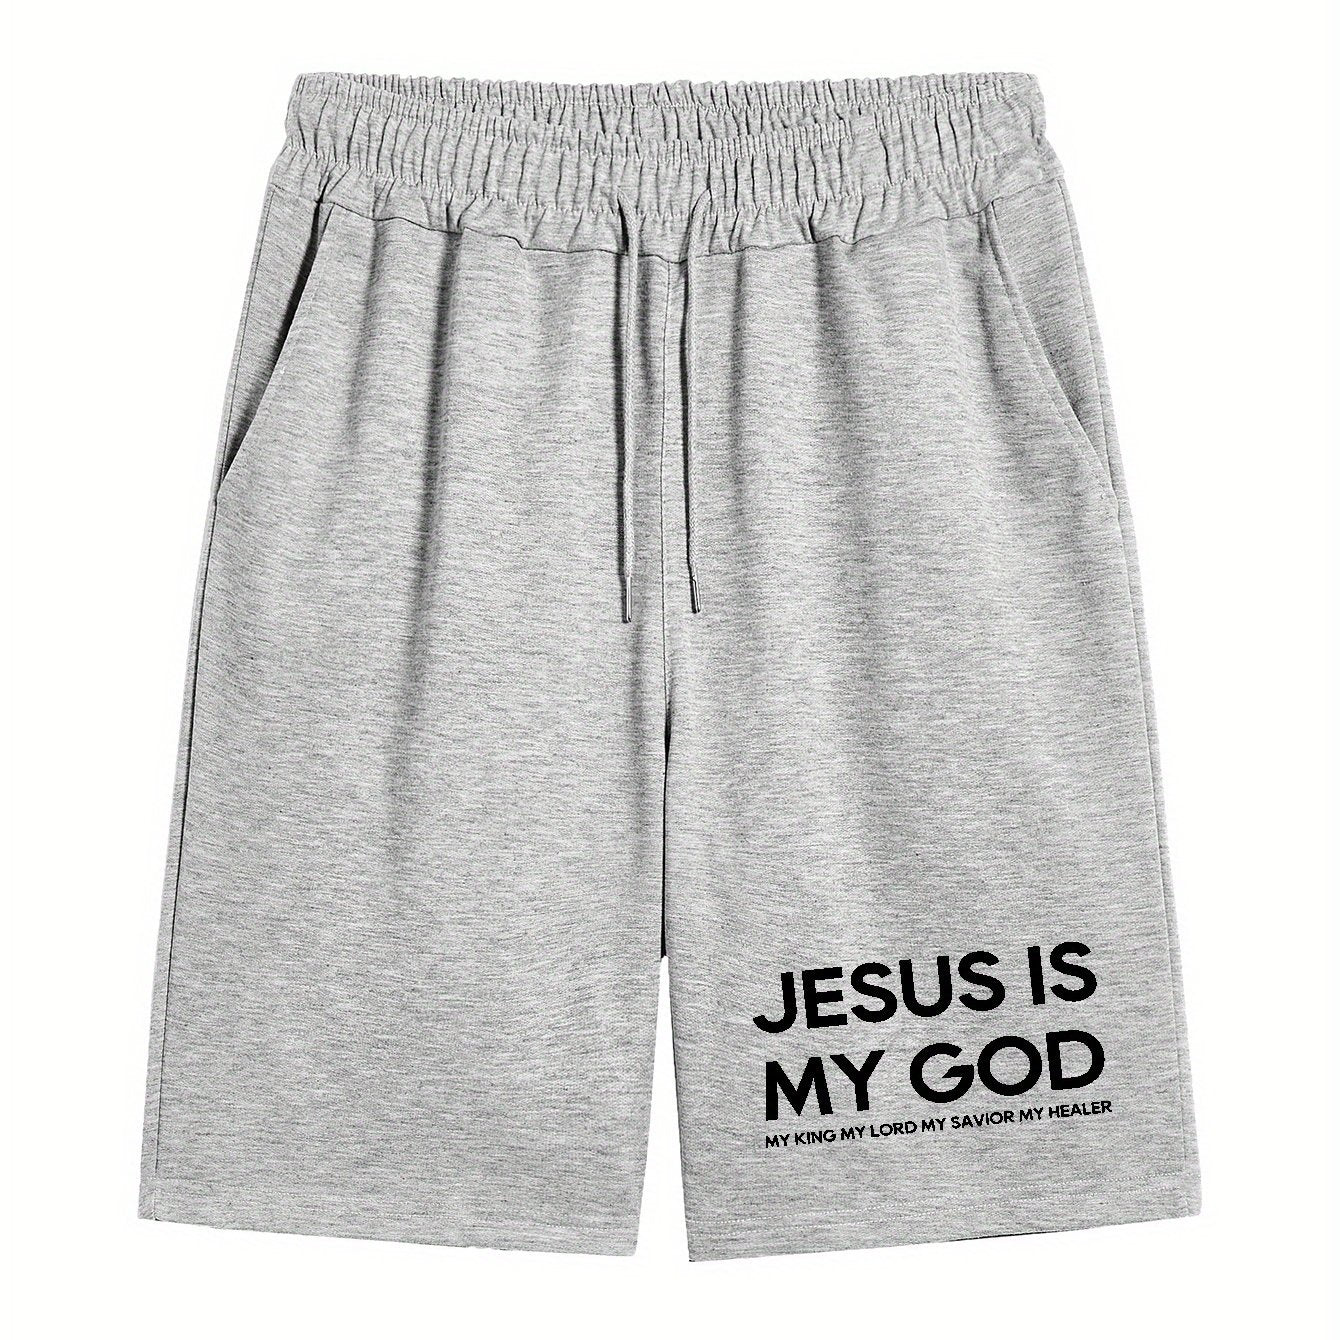 Jesus Is My God Men's Christian Shorts claimedbygoddesigns